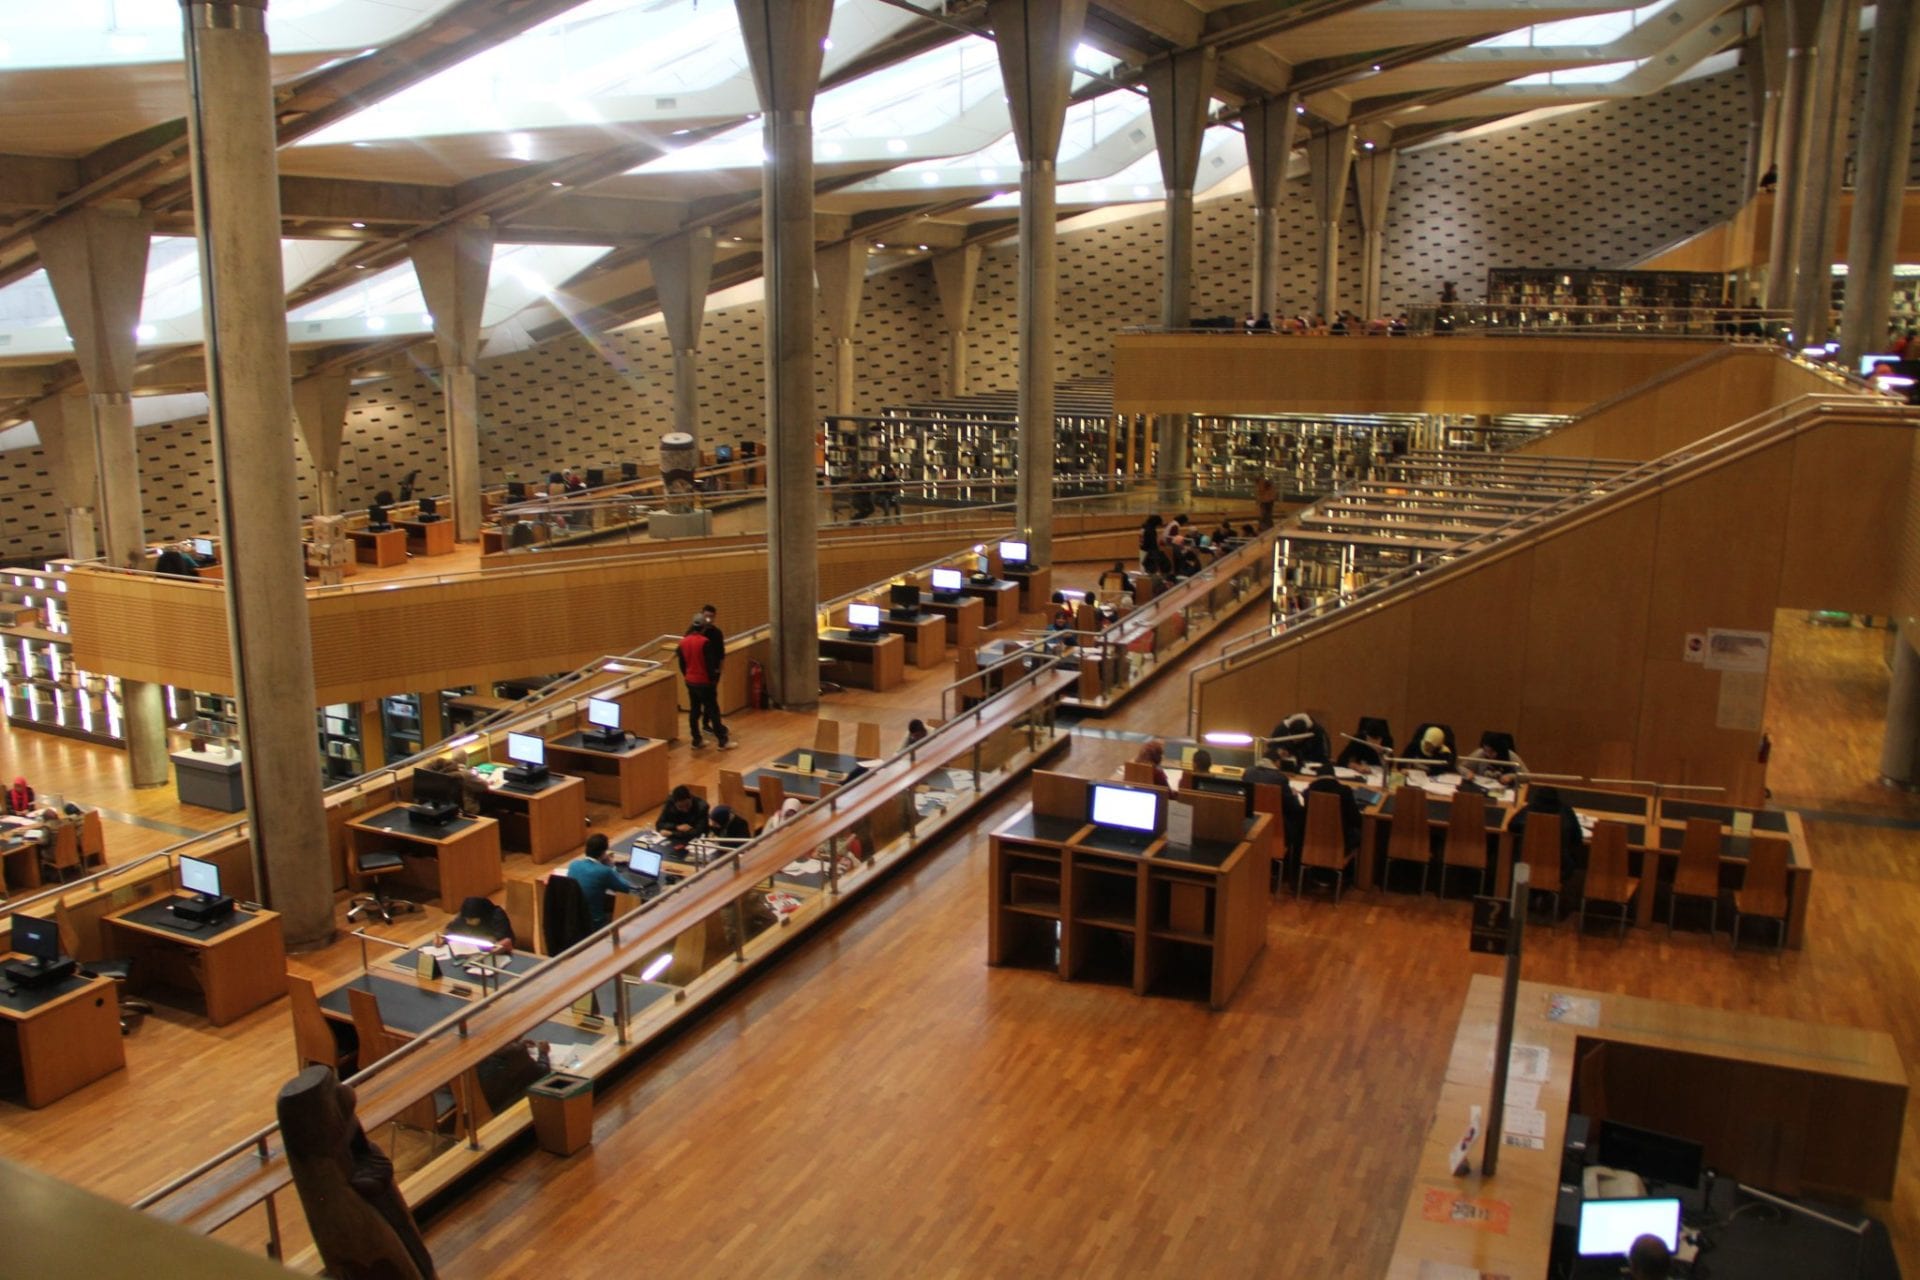 Alexandria Library Inside 2